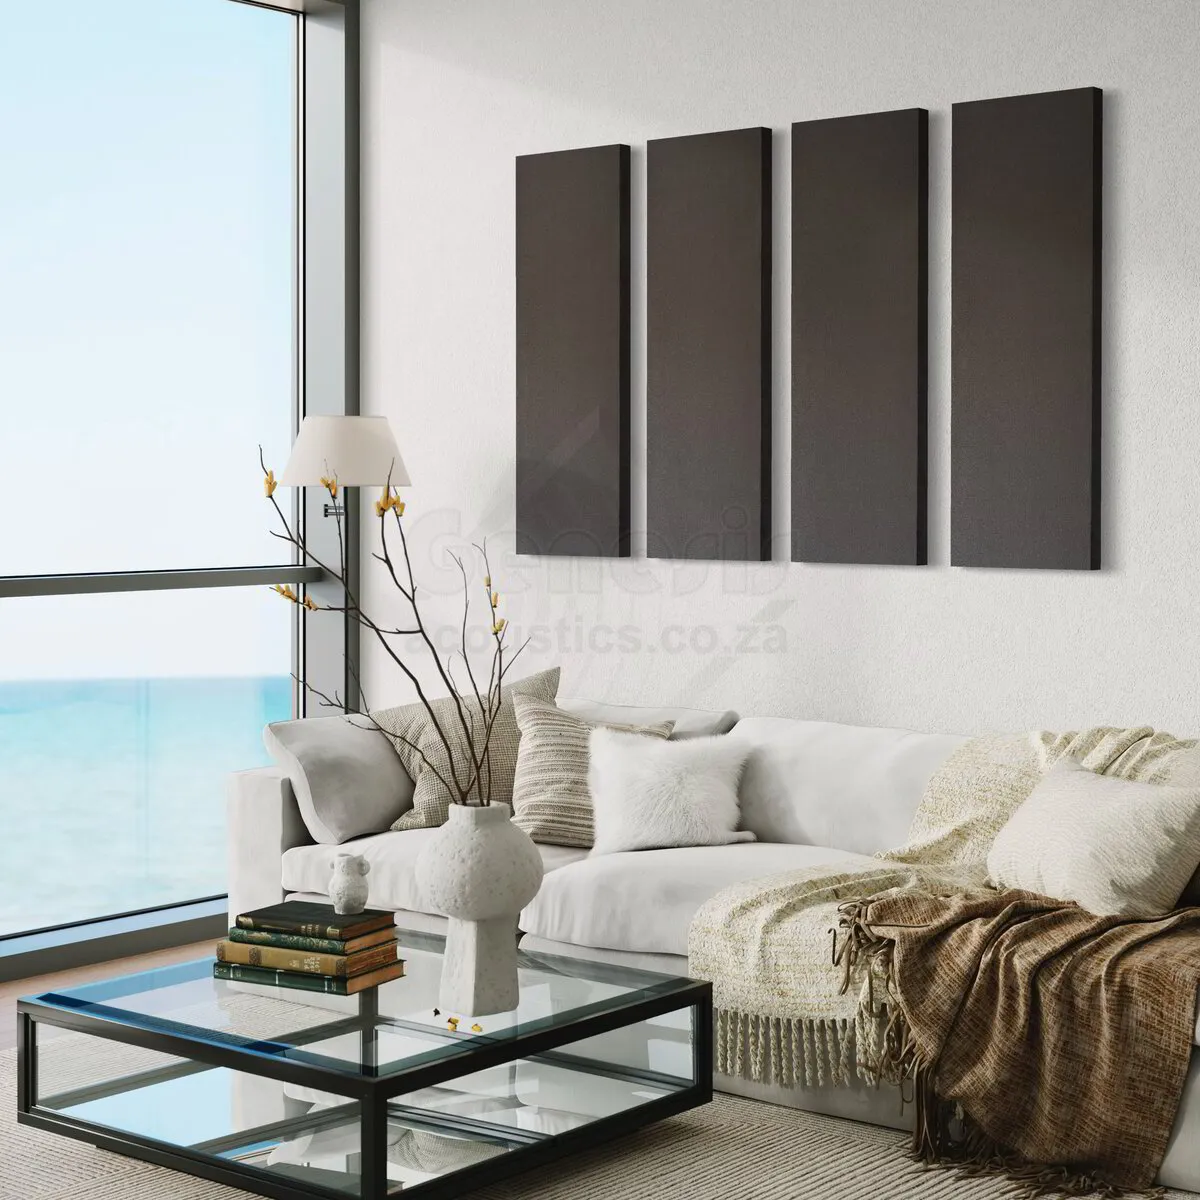 S5 Pro Acoustic Wall Panels - 120cm x 40cm Set of 4 - Grey